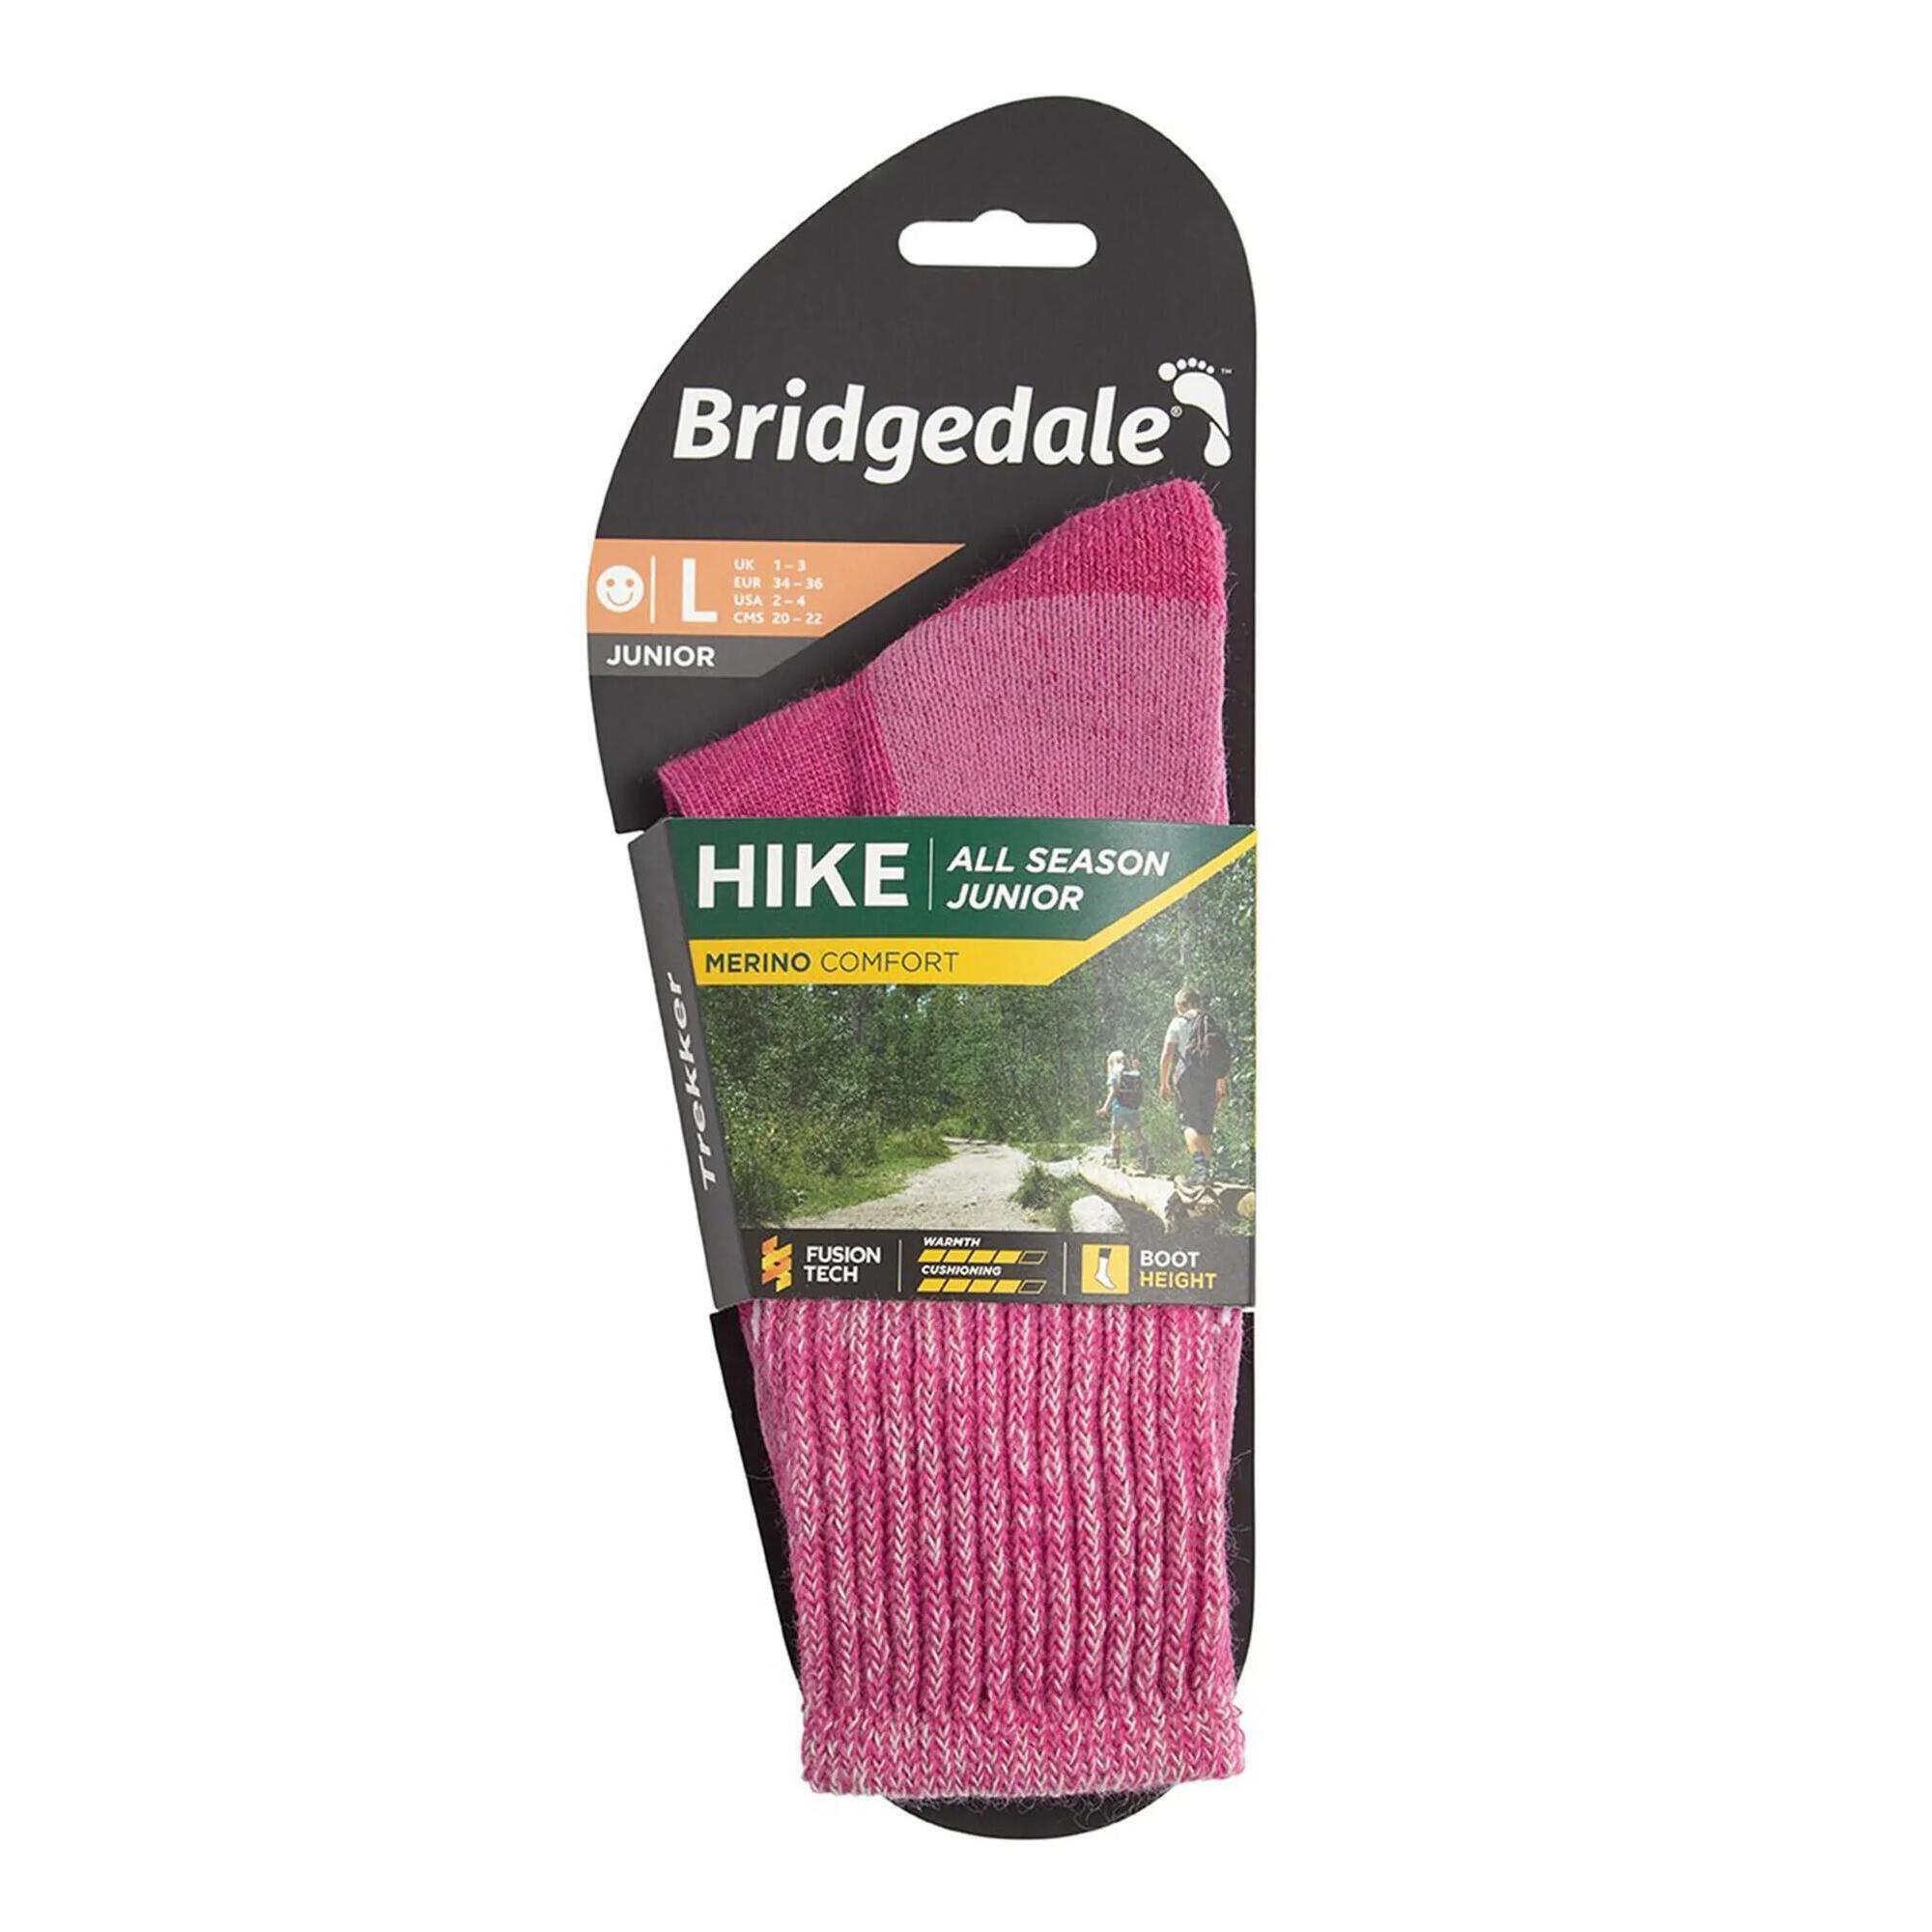 BRIDGEDALE HIKE All Season Merino Comfort Boot Junior - Pink